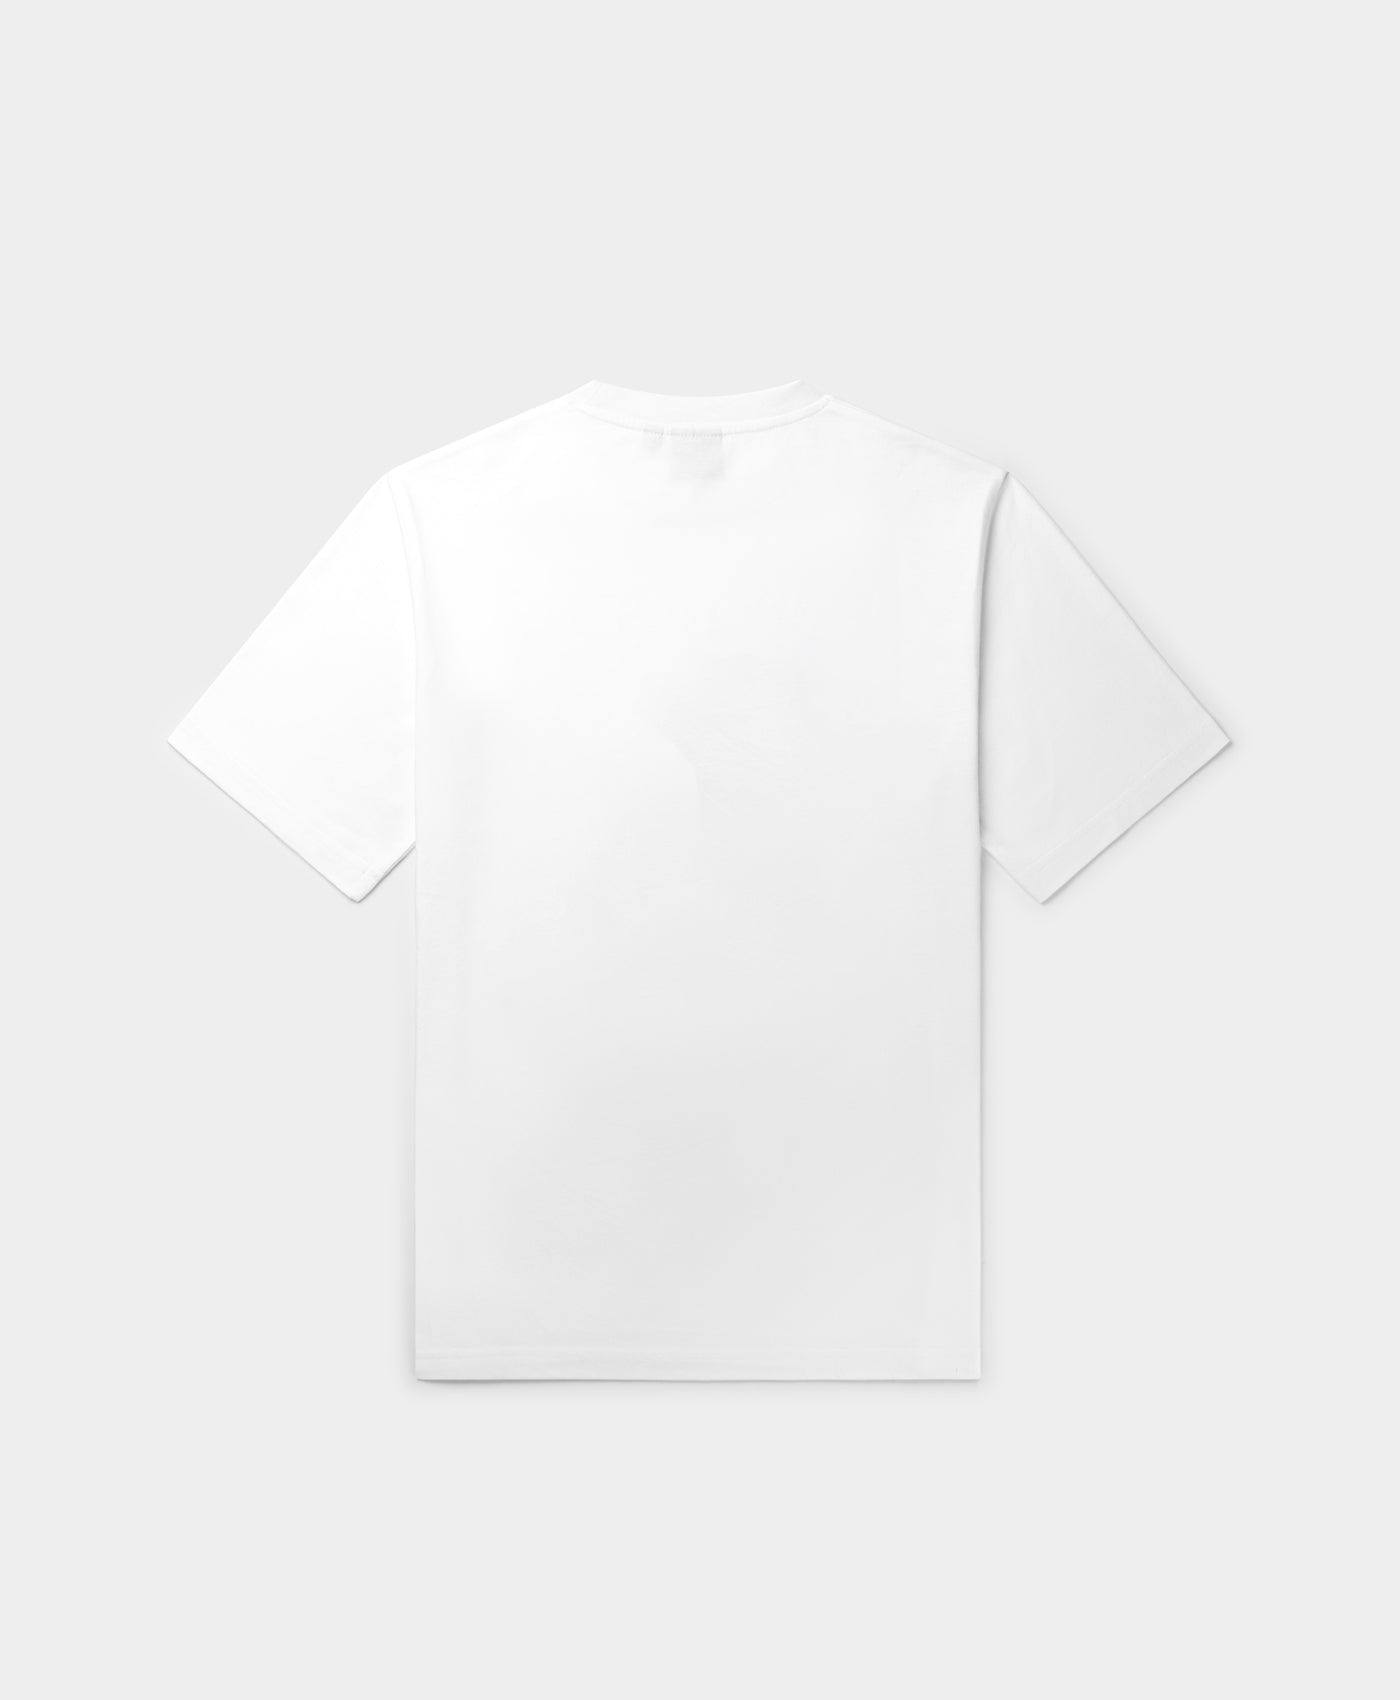 DP - White Landscape T-Shirt - Packshot - Rear